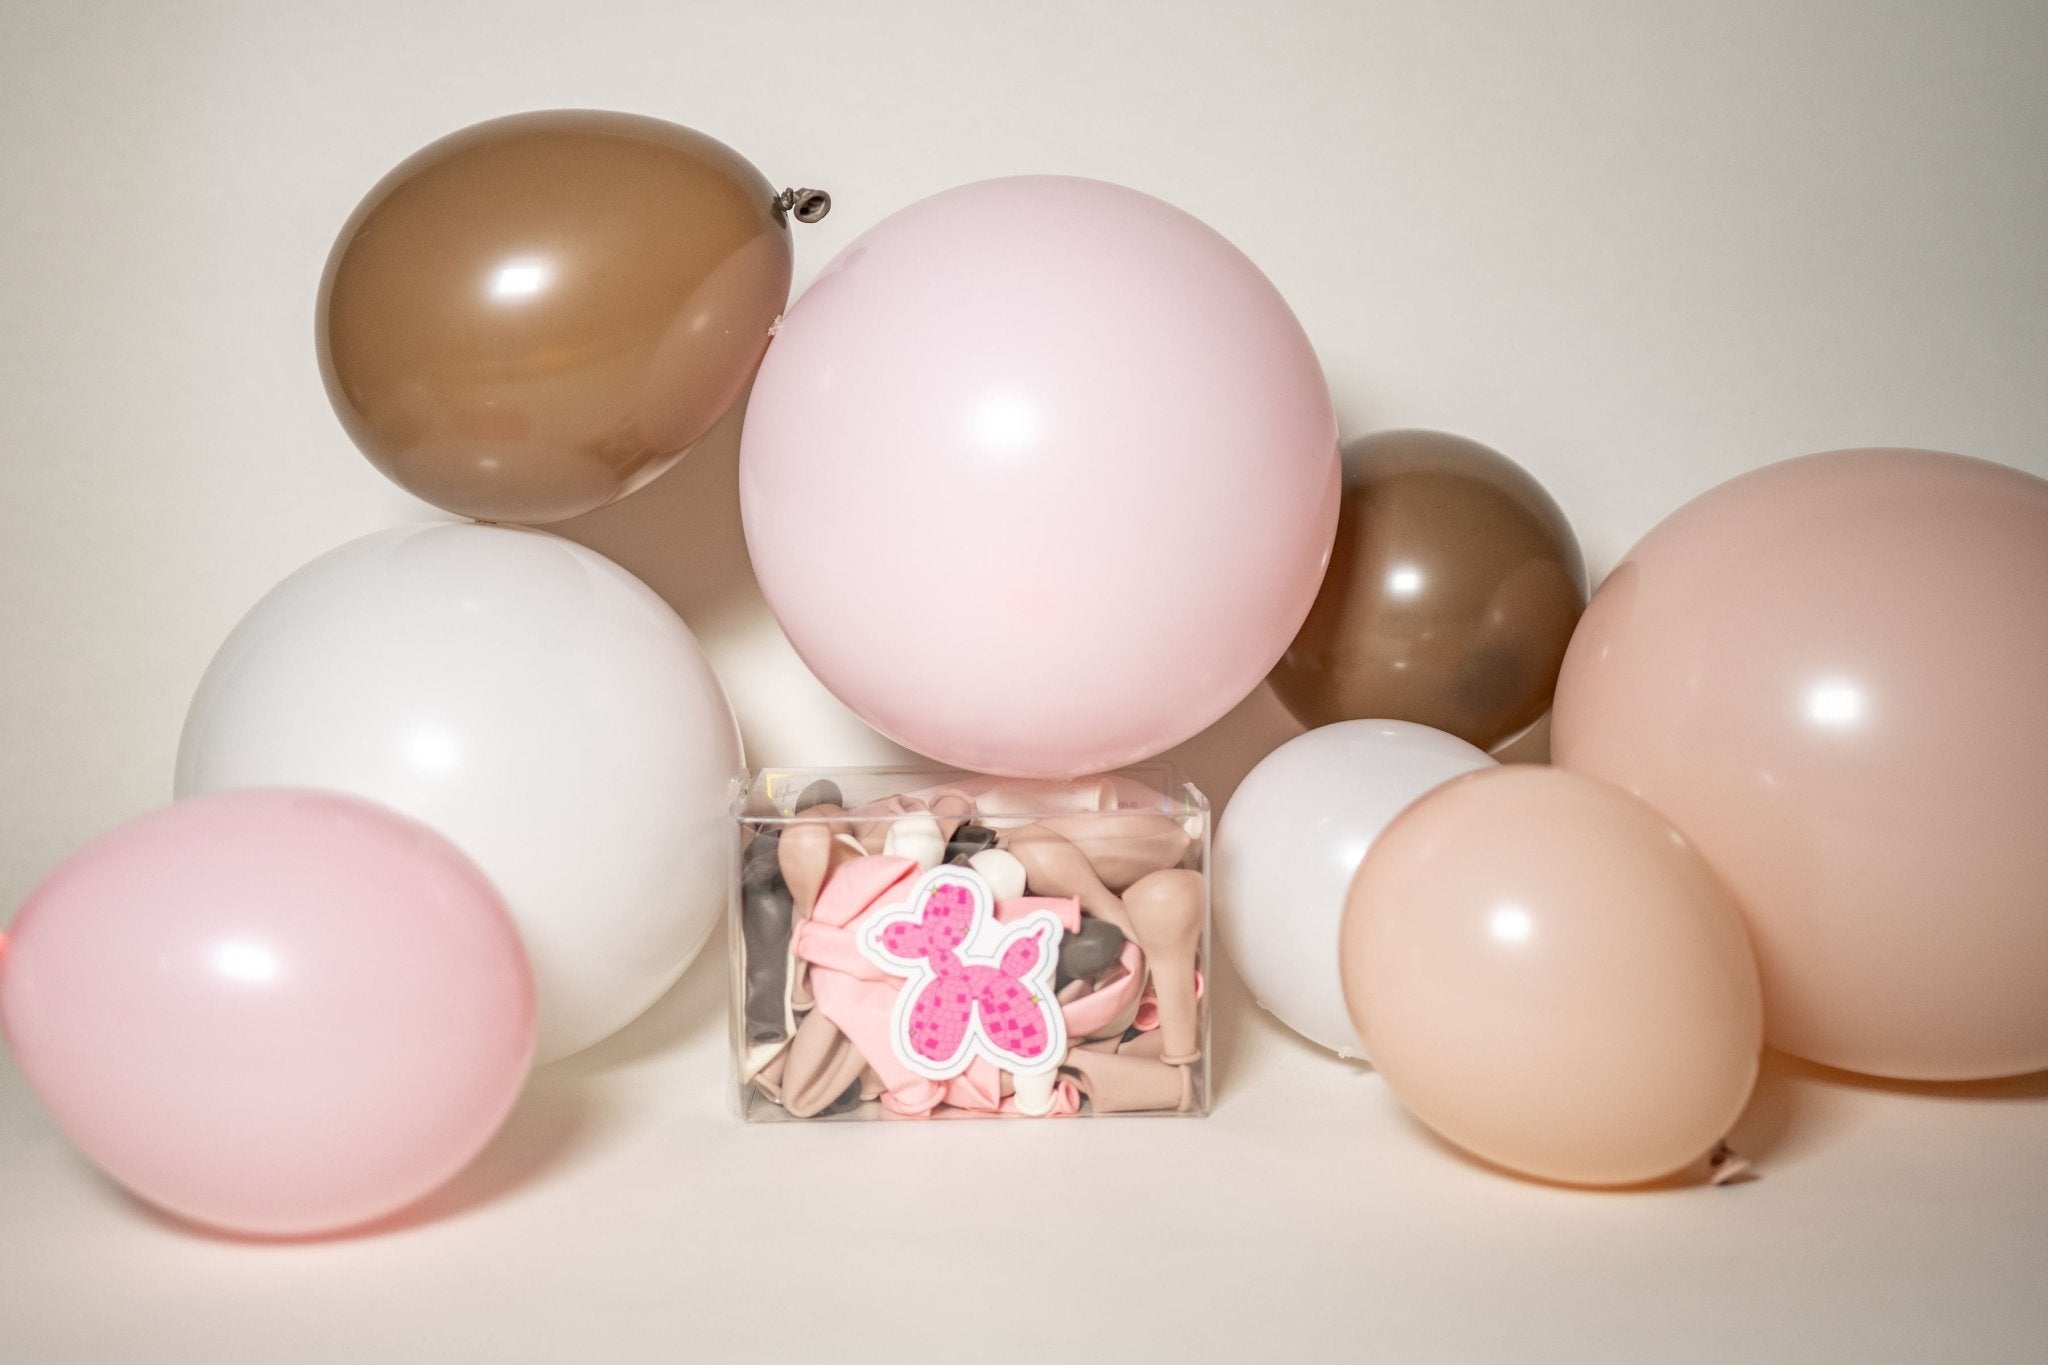 Teddy Bear Pink Balloon Garland - The Disco Edit